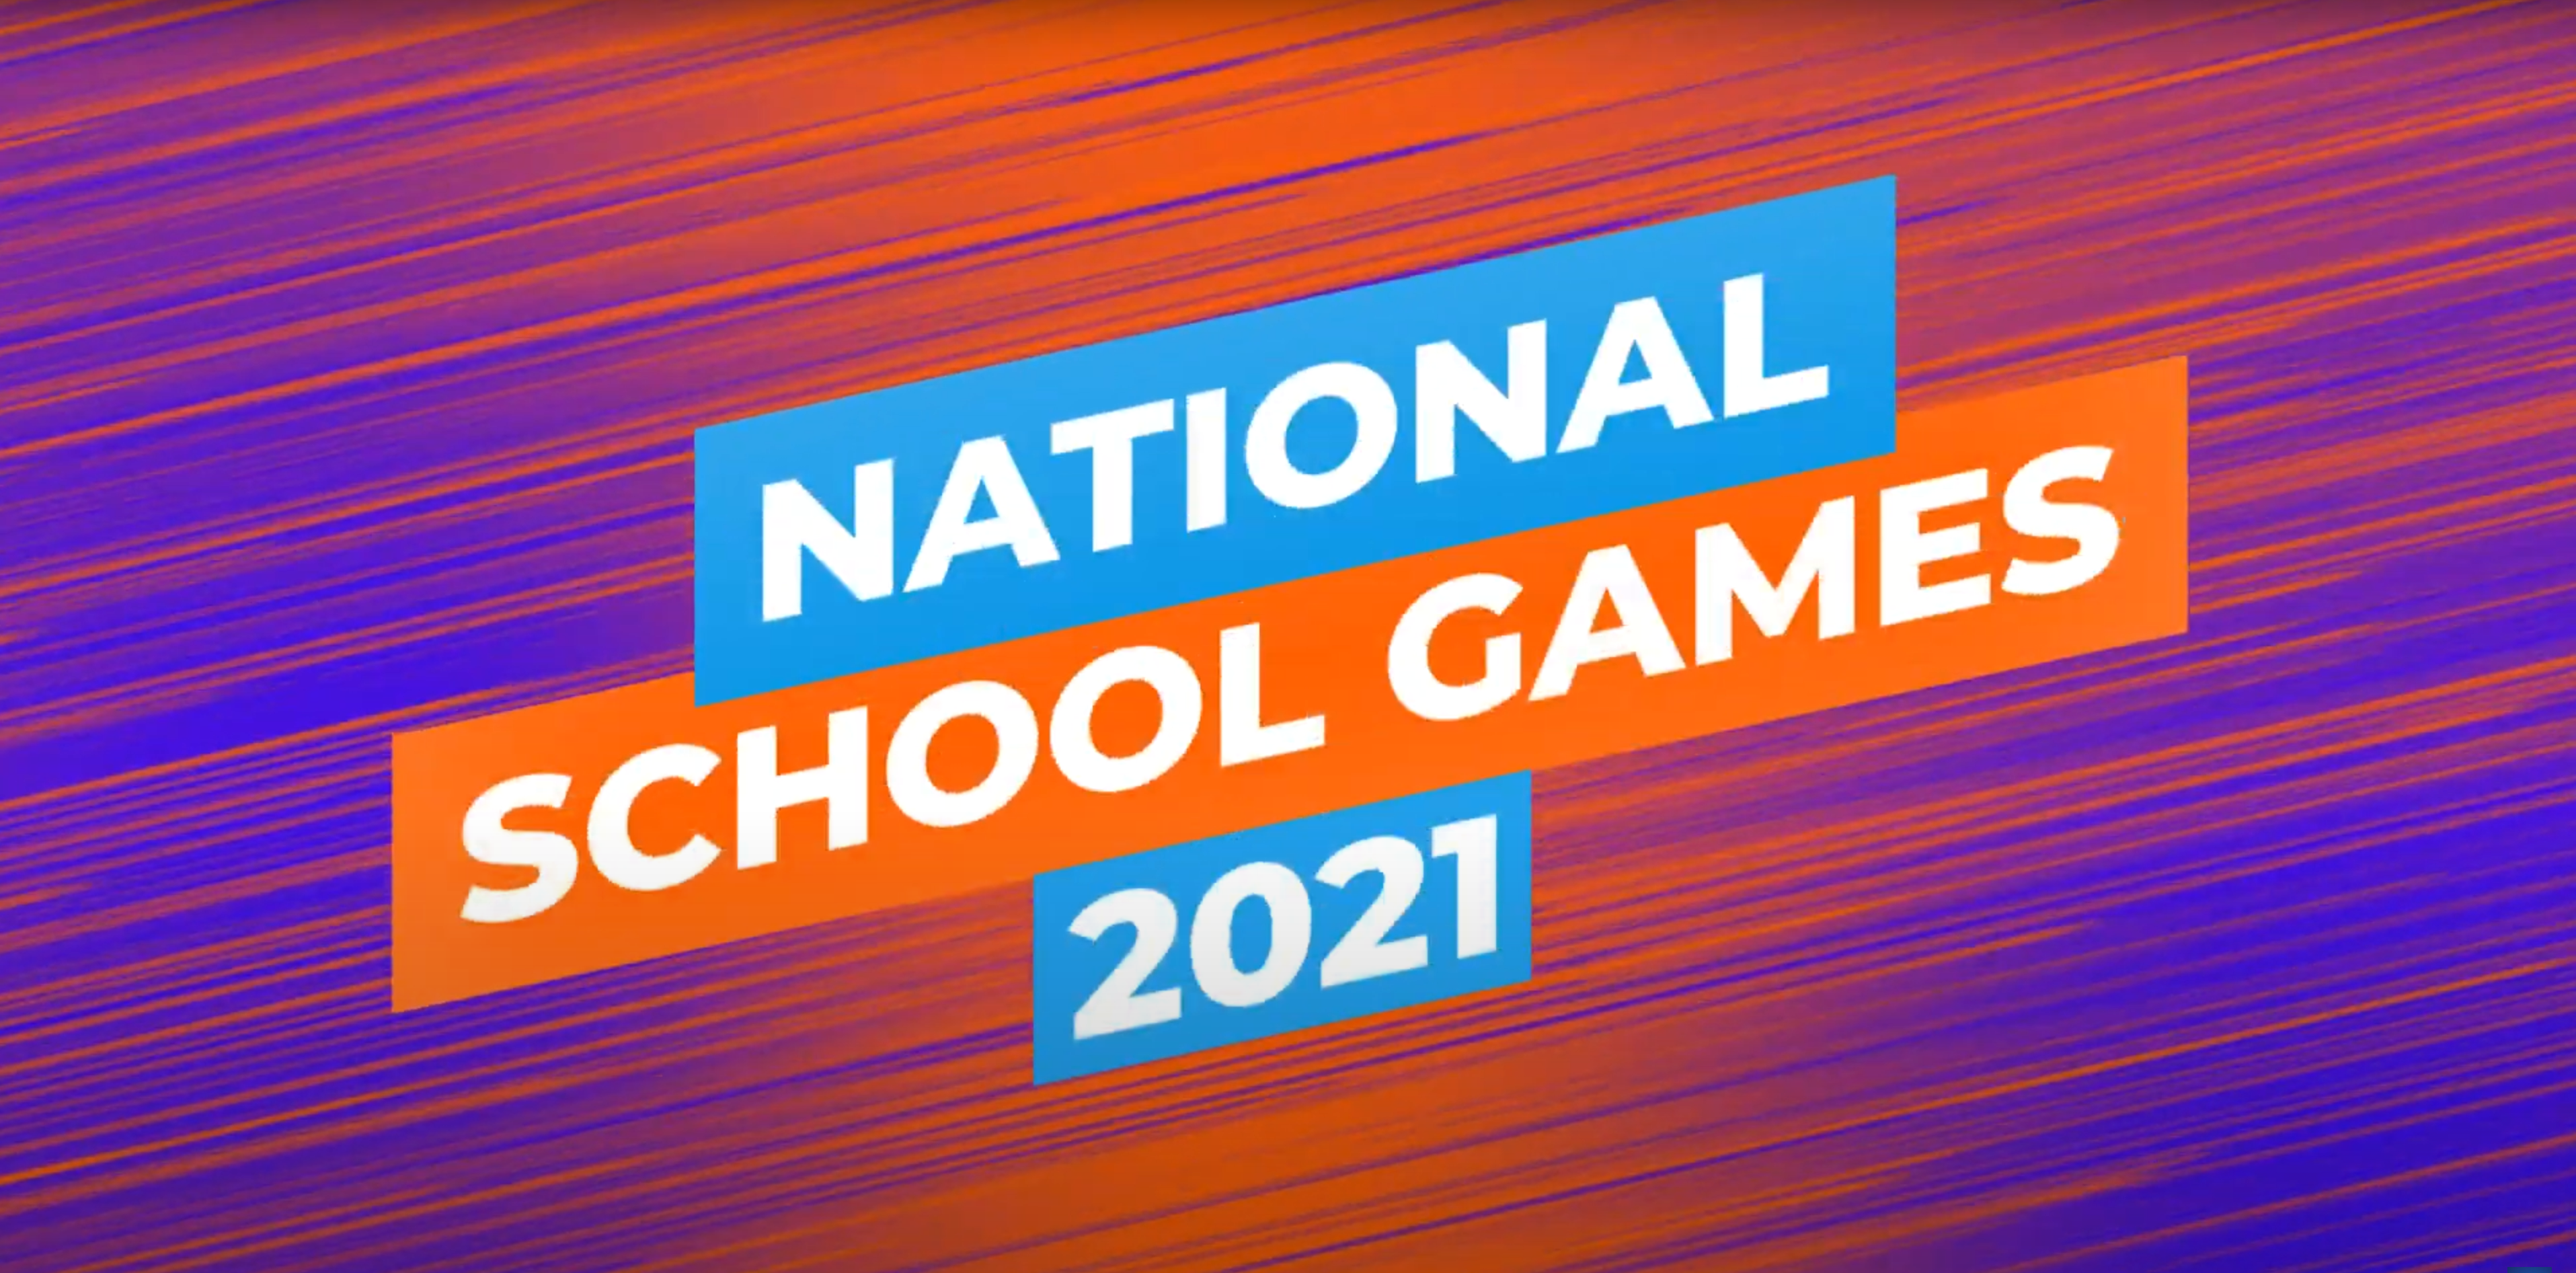  National School Games 2021 | Taekwondo